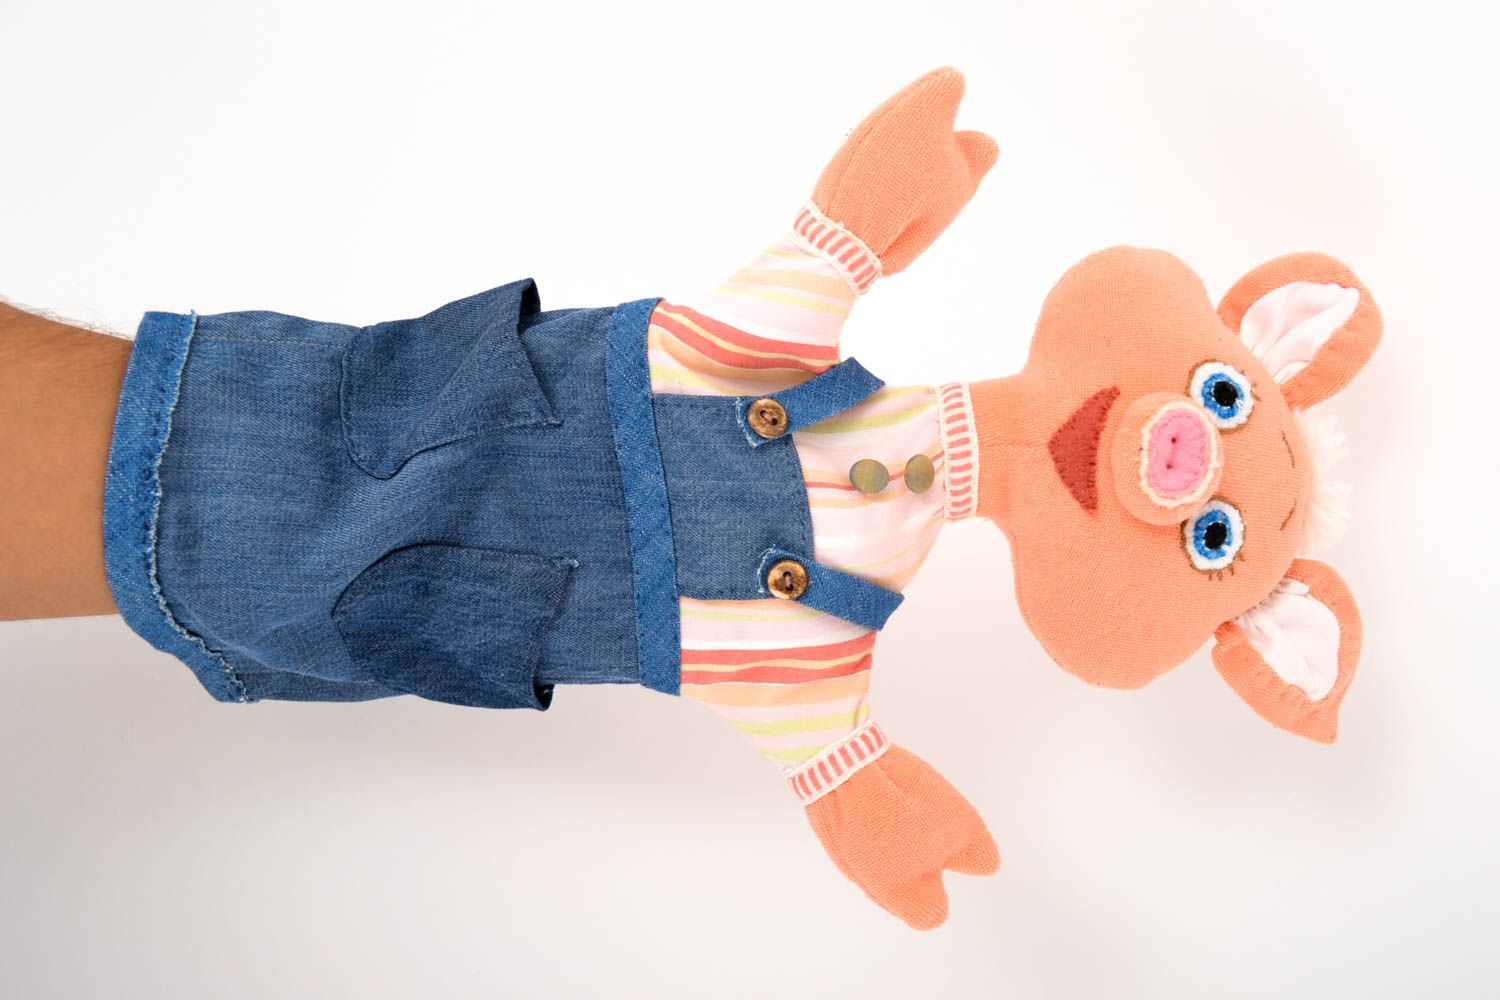 Handmade puppet toy stuffed toys nursery decor ideas present for children photo 1